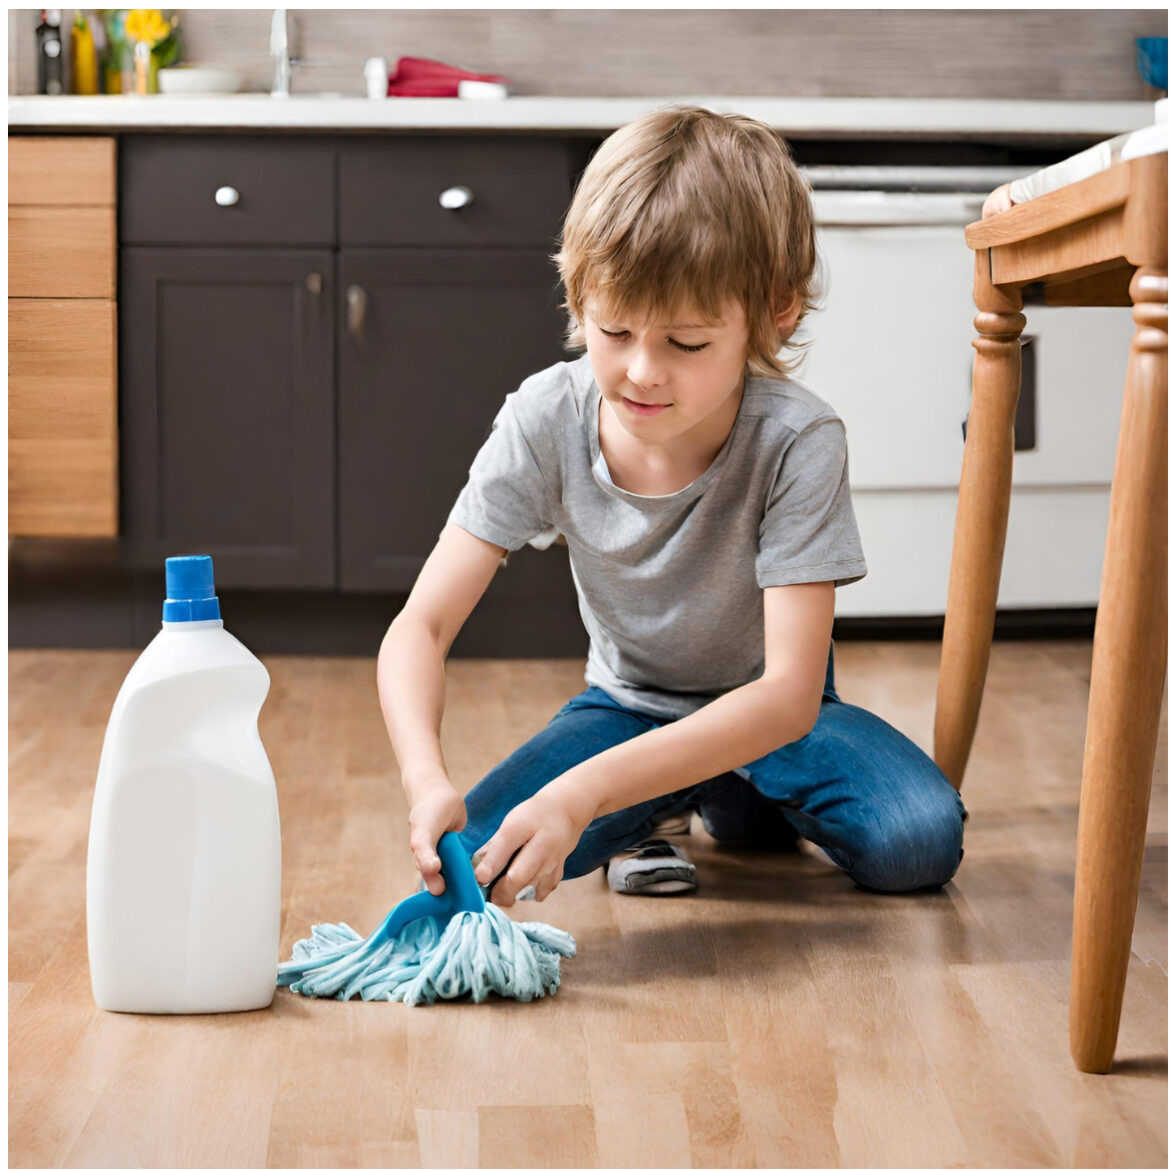 Should parents make their children do chores?